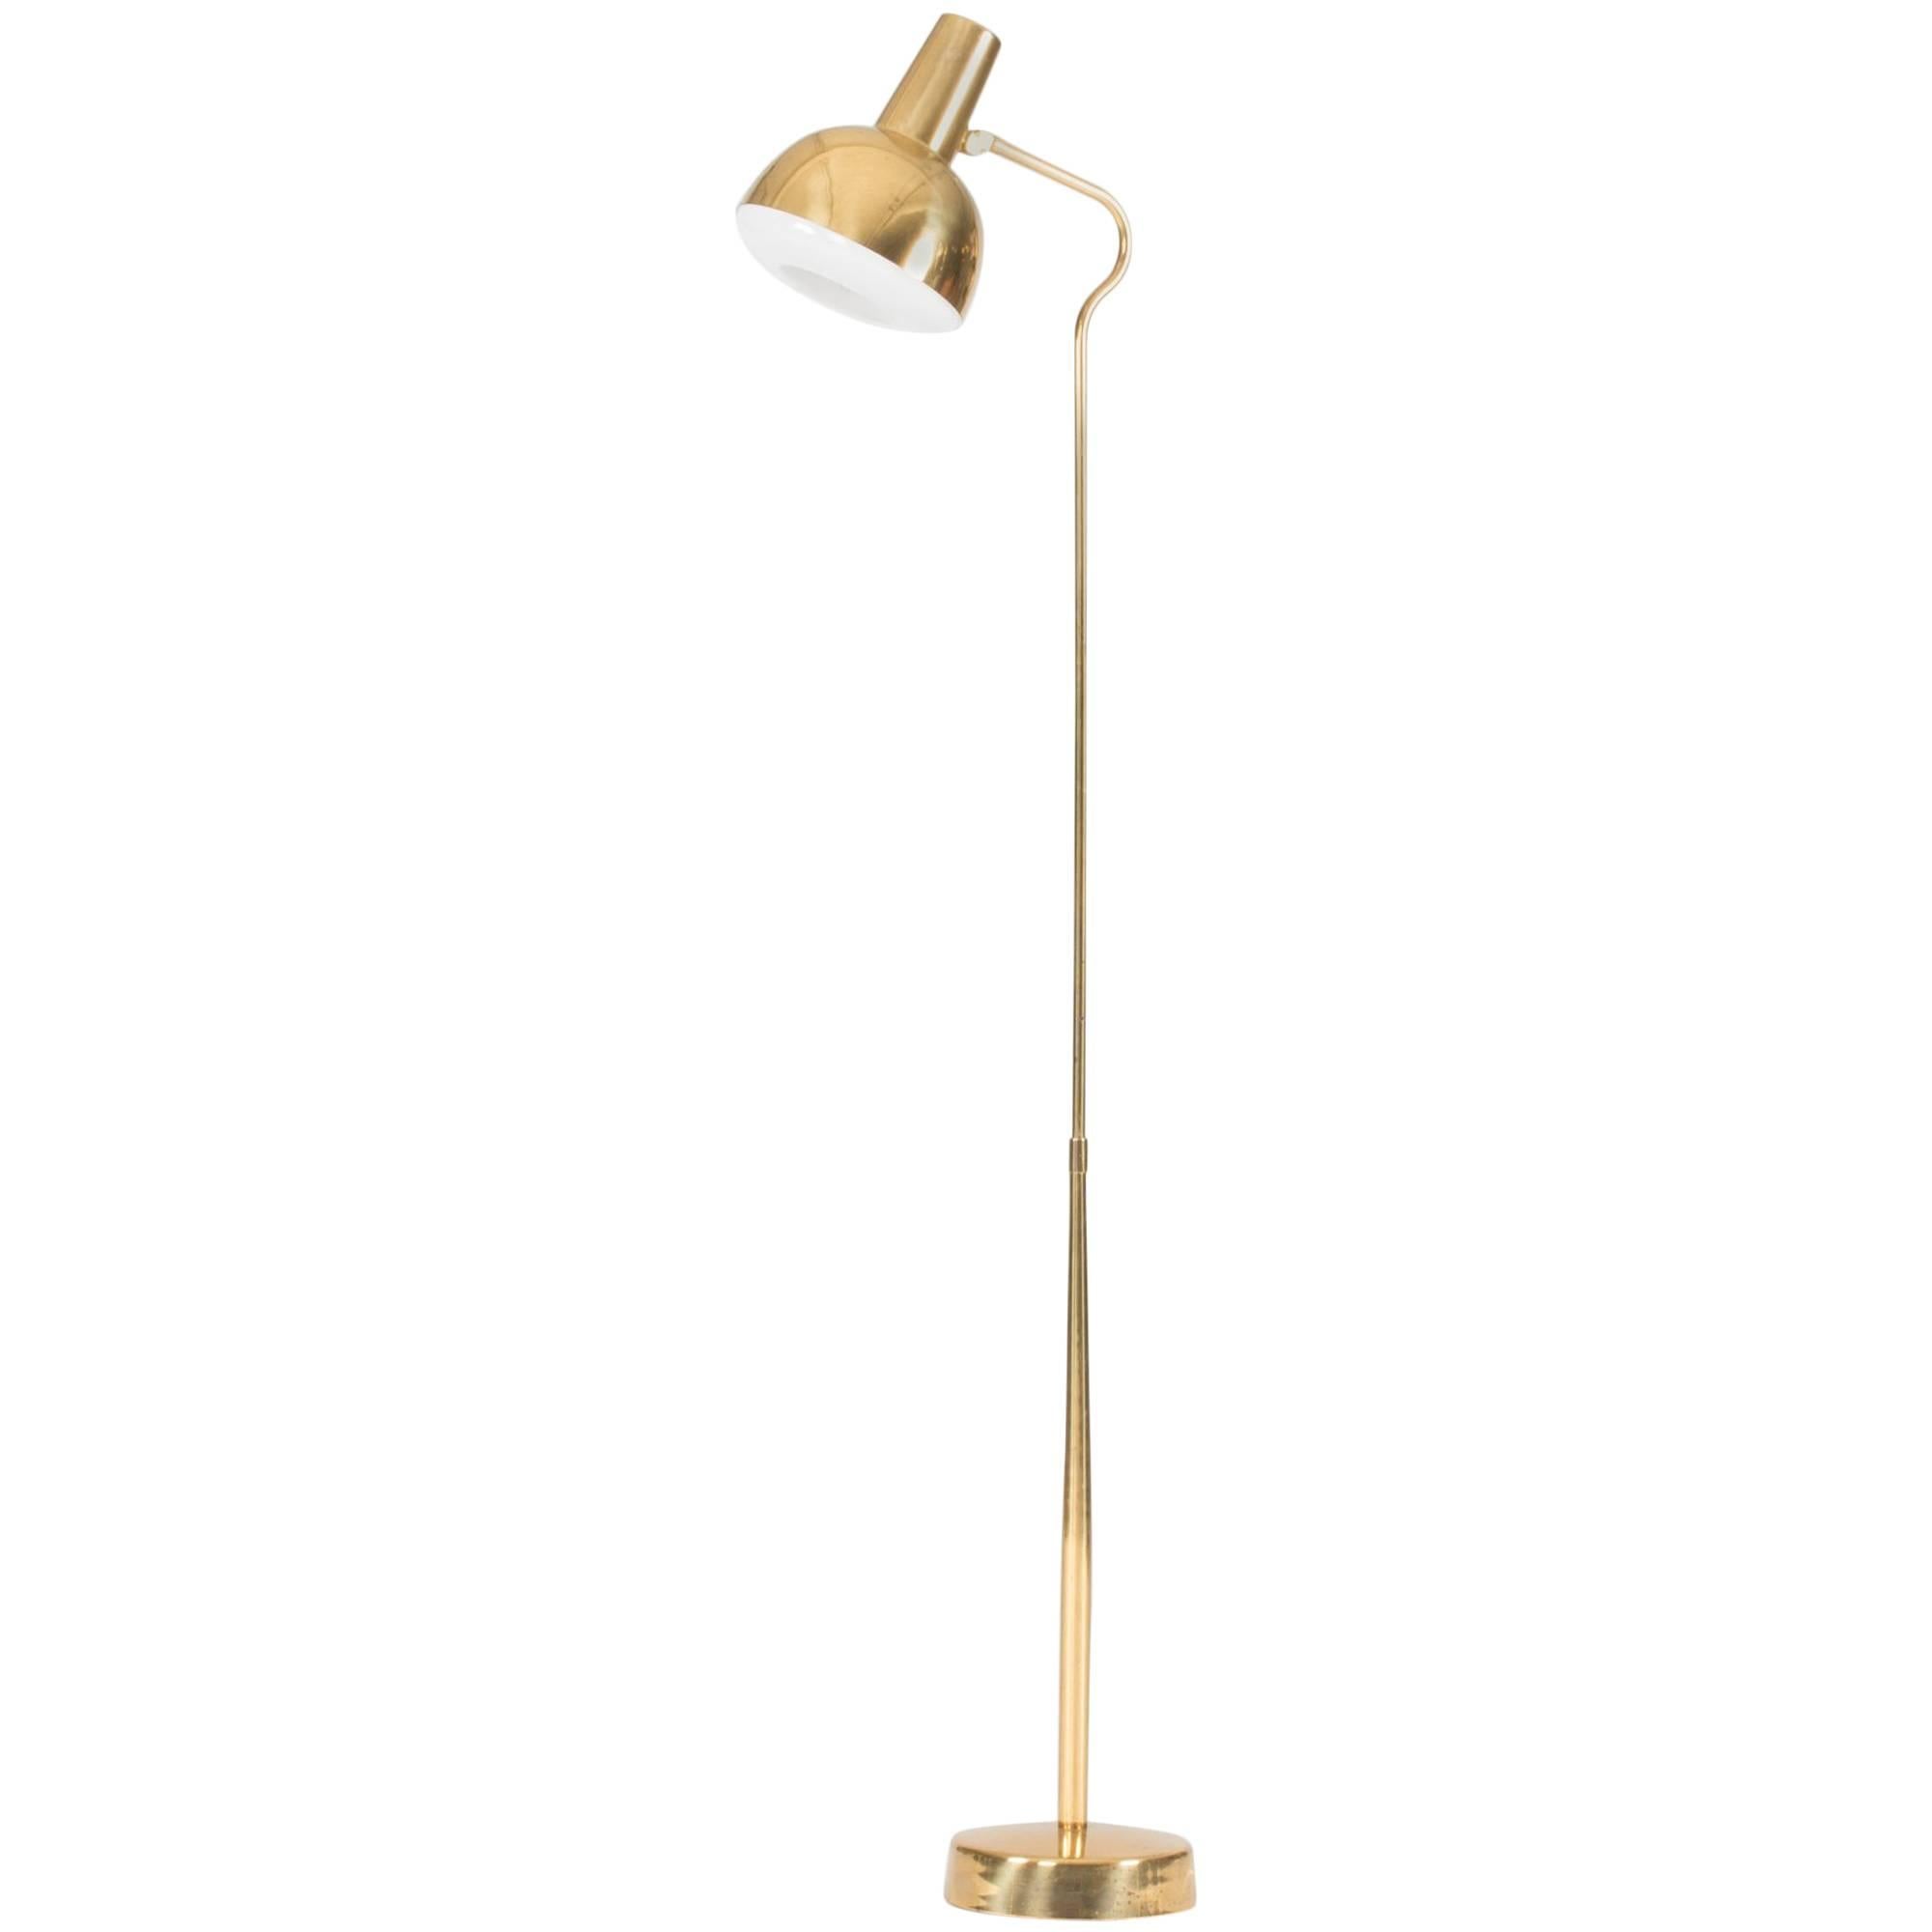 Brass Floor Lamp from ASEA